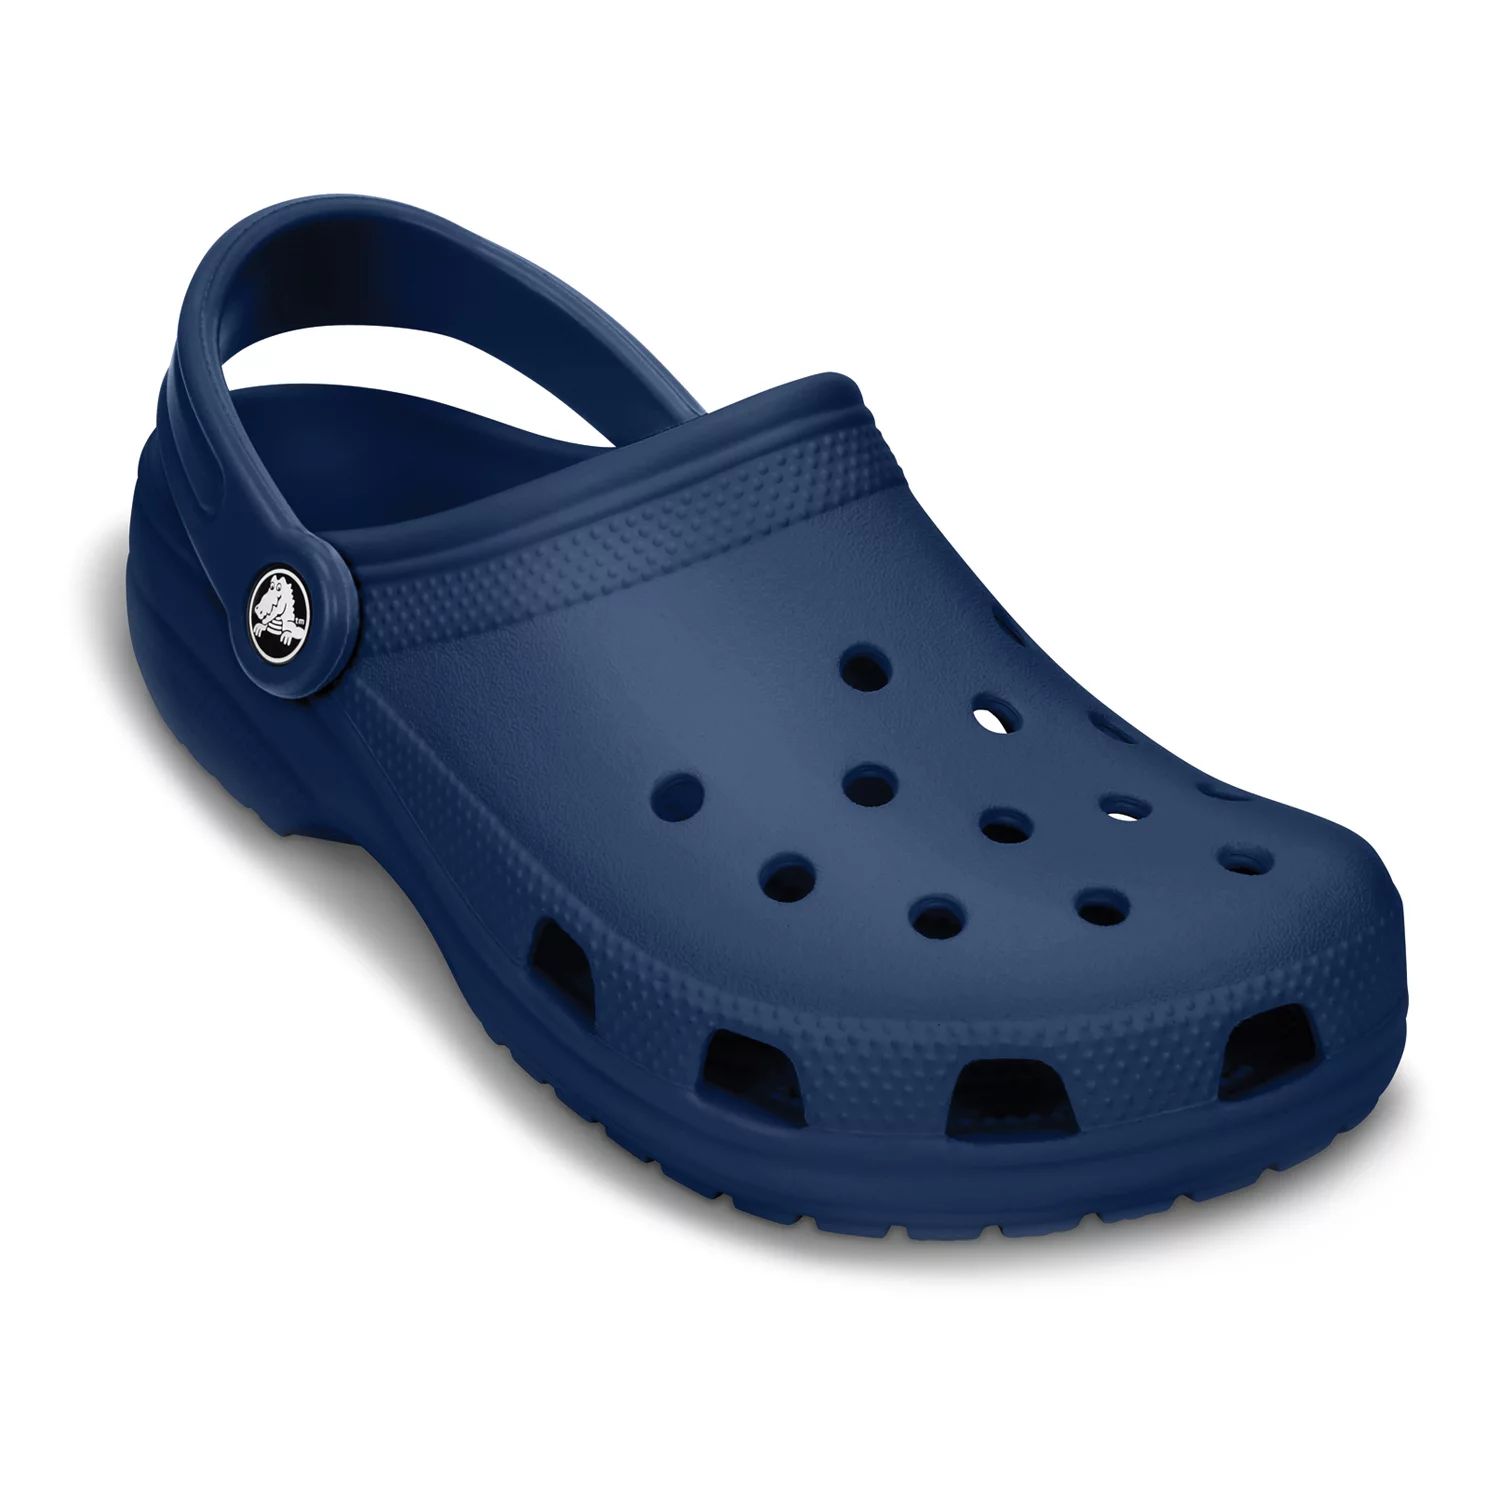 Сабо крокс мужские. Crocs Classic Clog. Крокс сабо синие. Кроксы женские Crocs Classic. Сабо крокс Классик голубые.